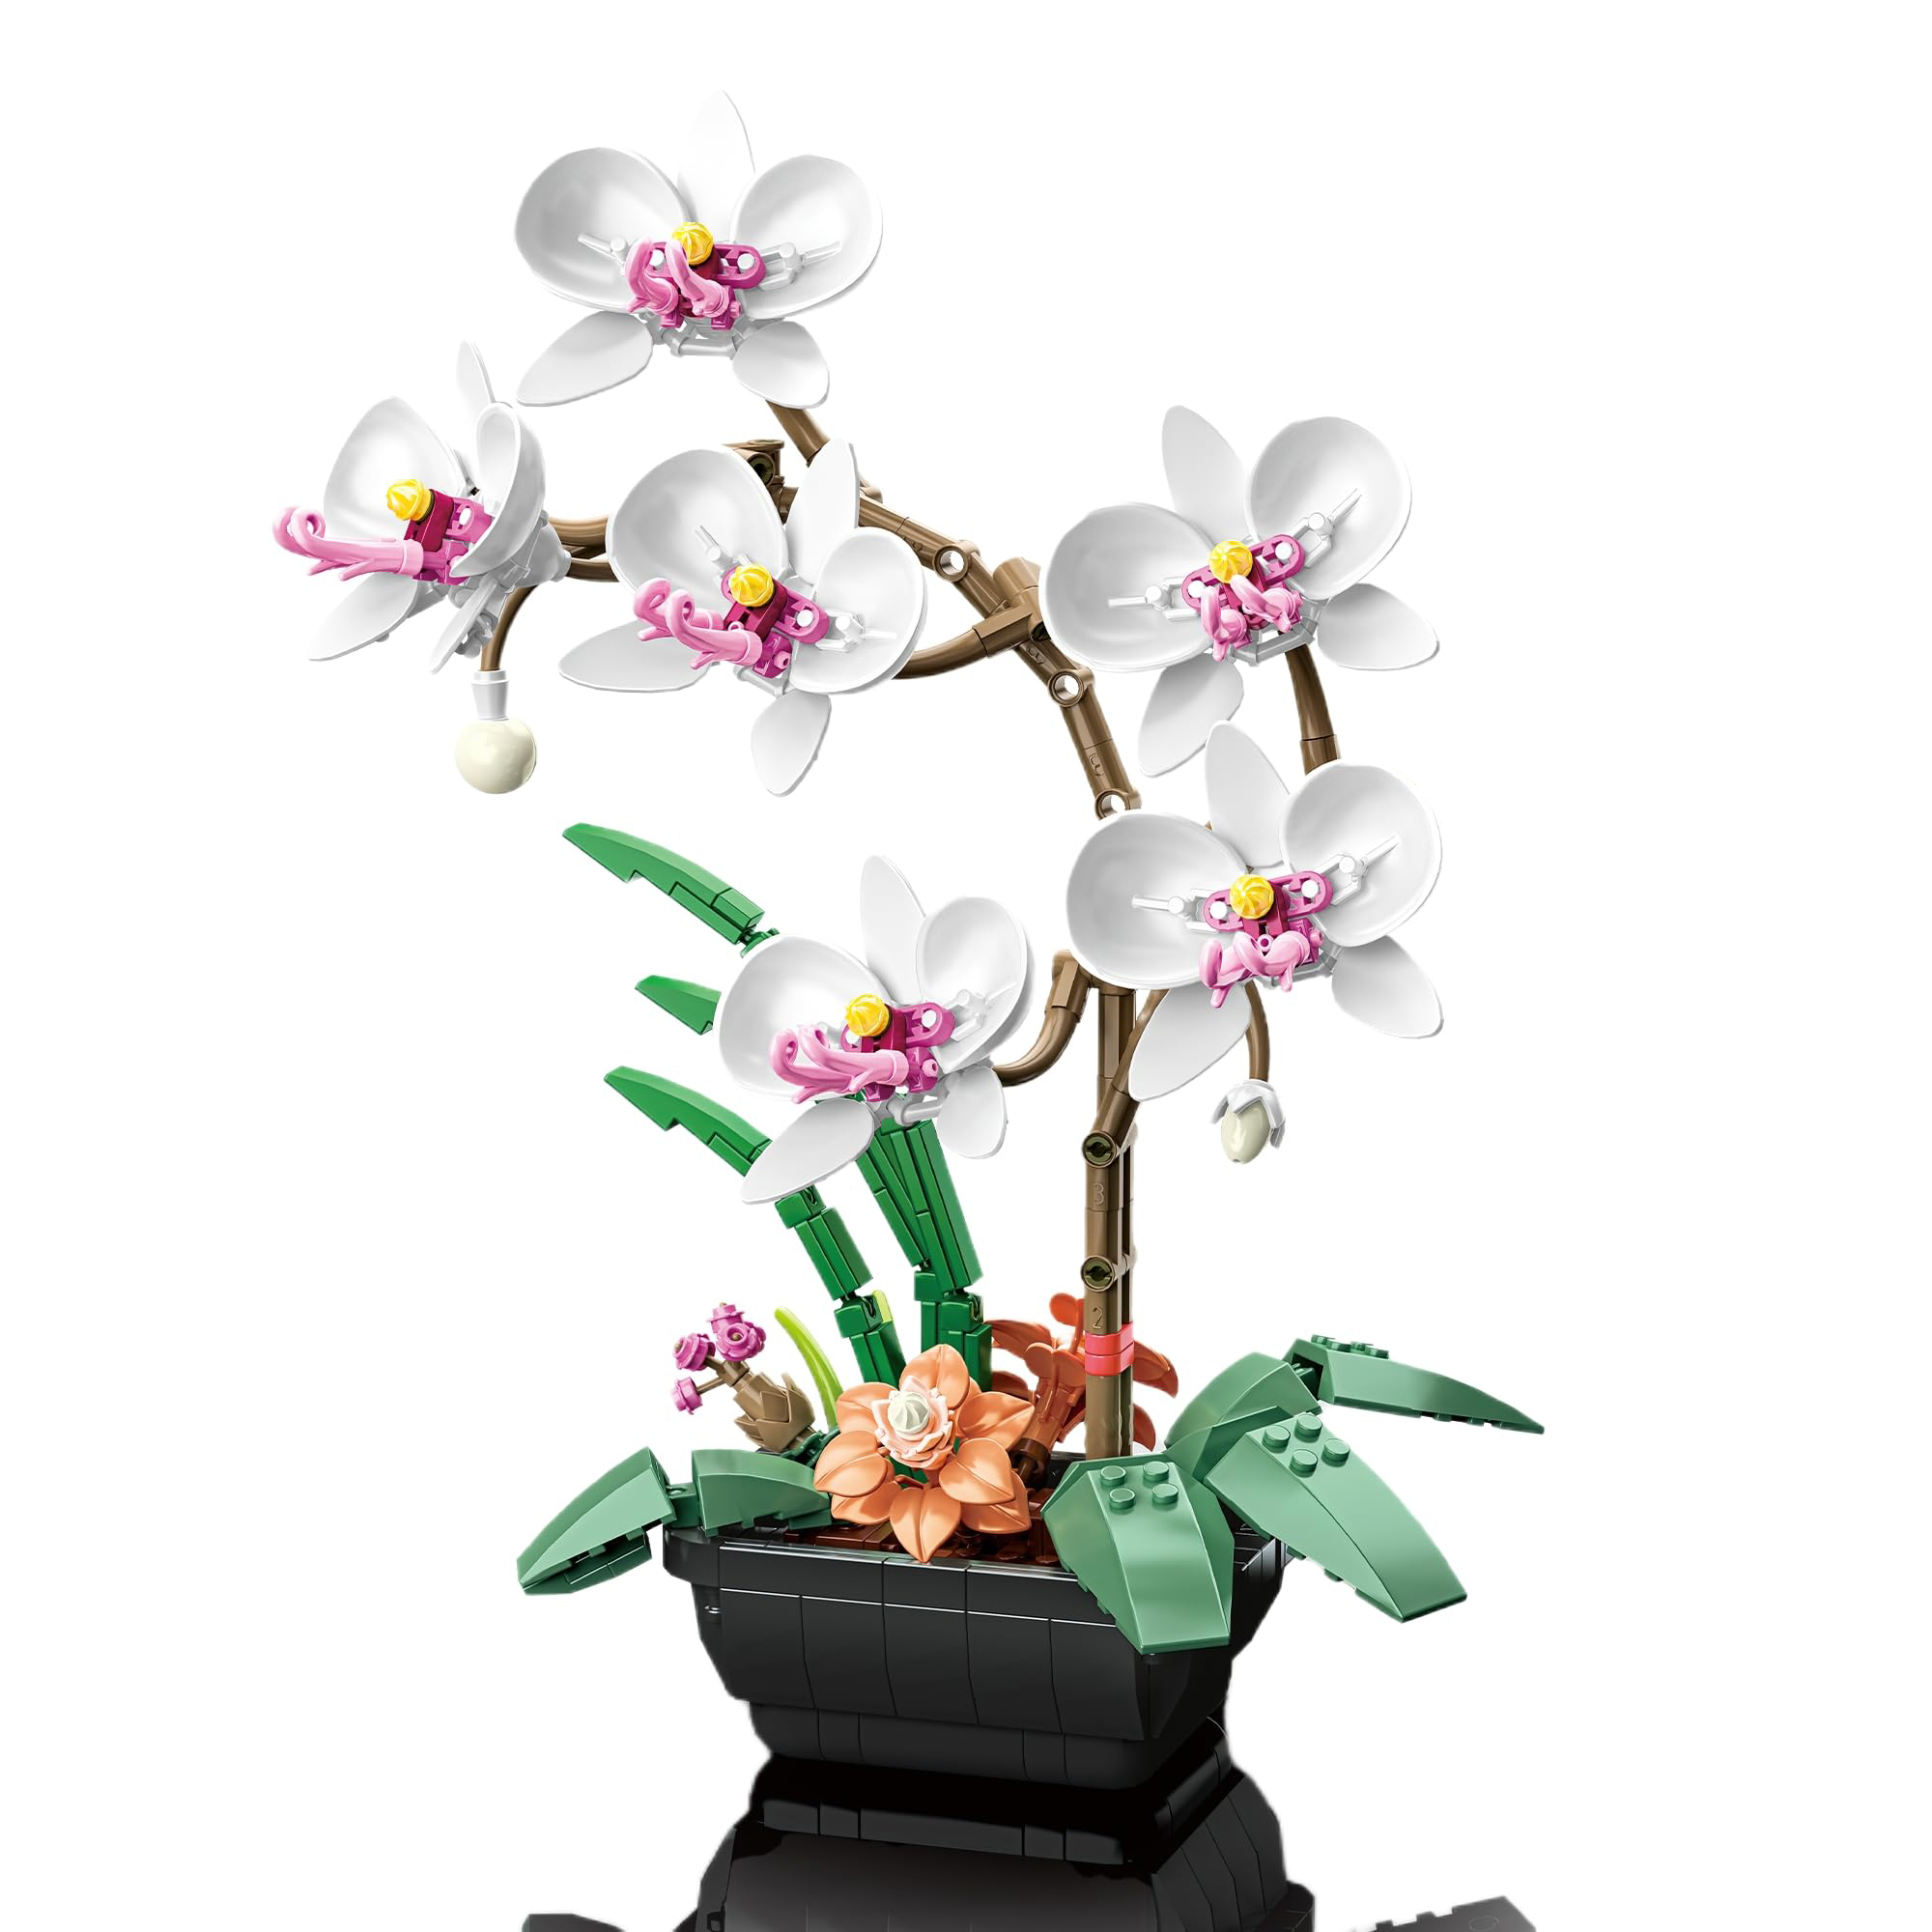 HI-Reeke Flower Building Block Set Orchid Botanical Bonsai Building Kit Toy Gift for Kid Adult White - image 1 of 6